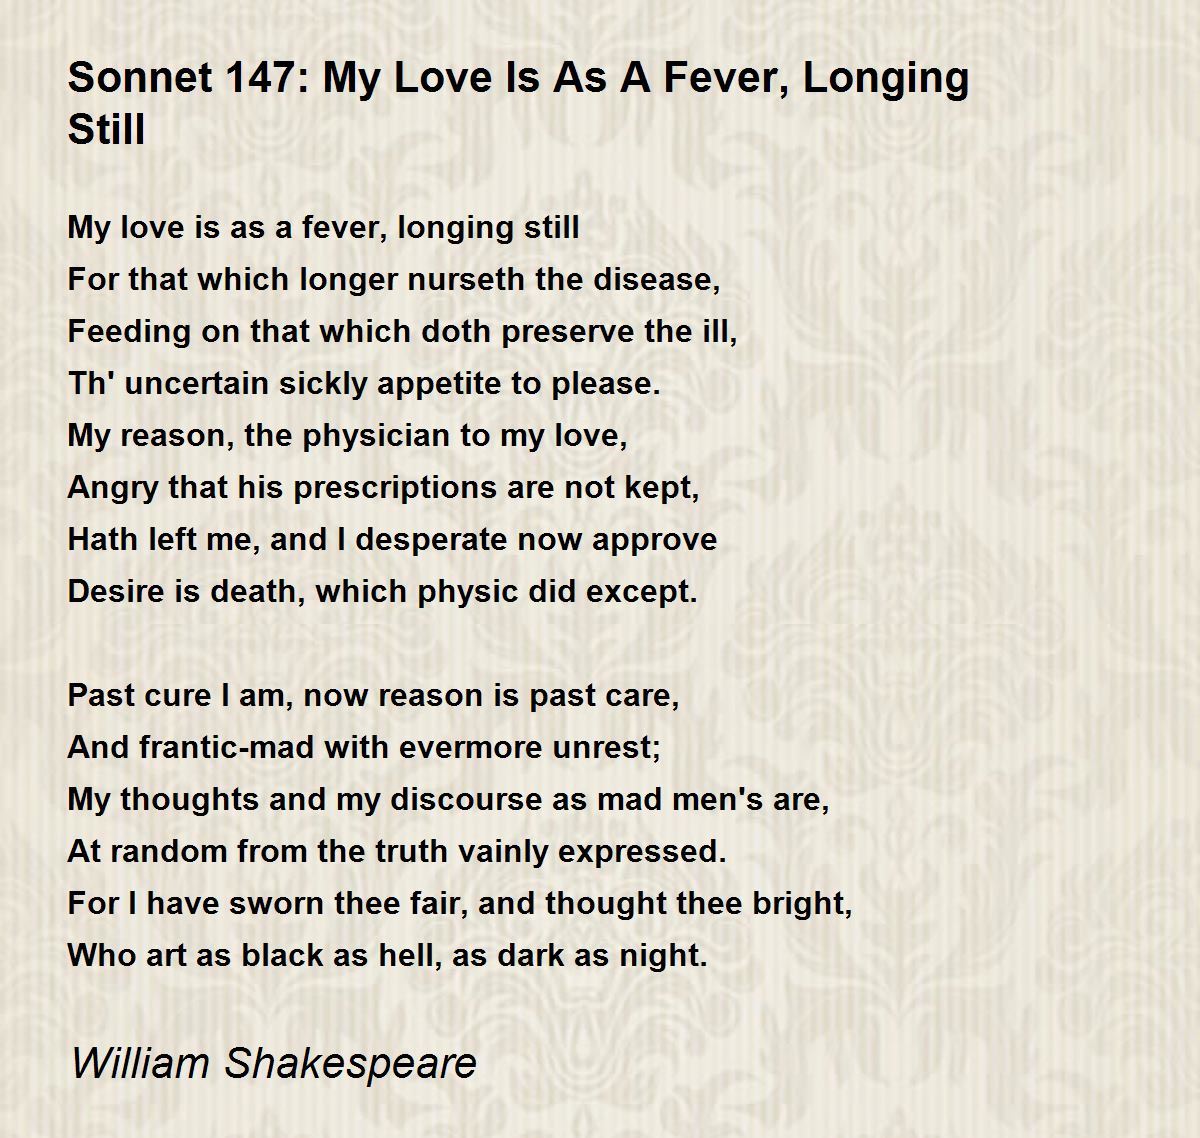 sonnet-147-my-love-is-as-a-fever-longing-still.jpg